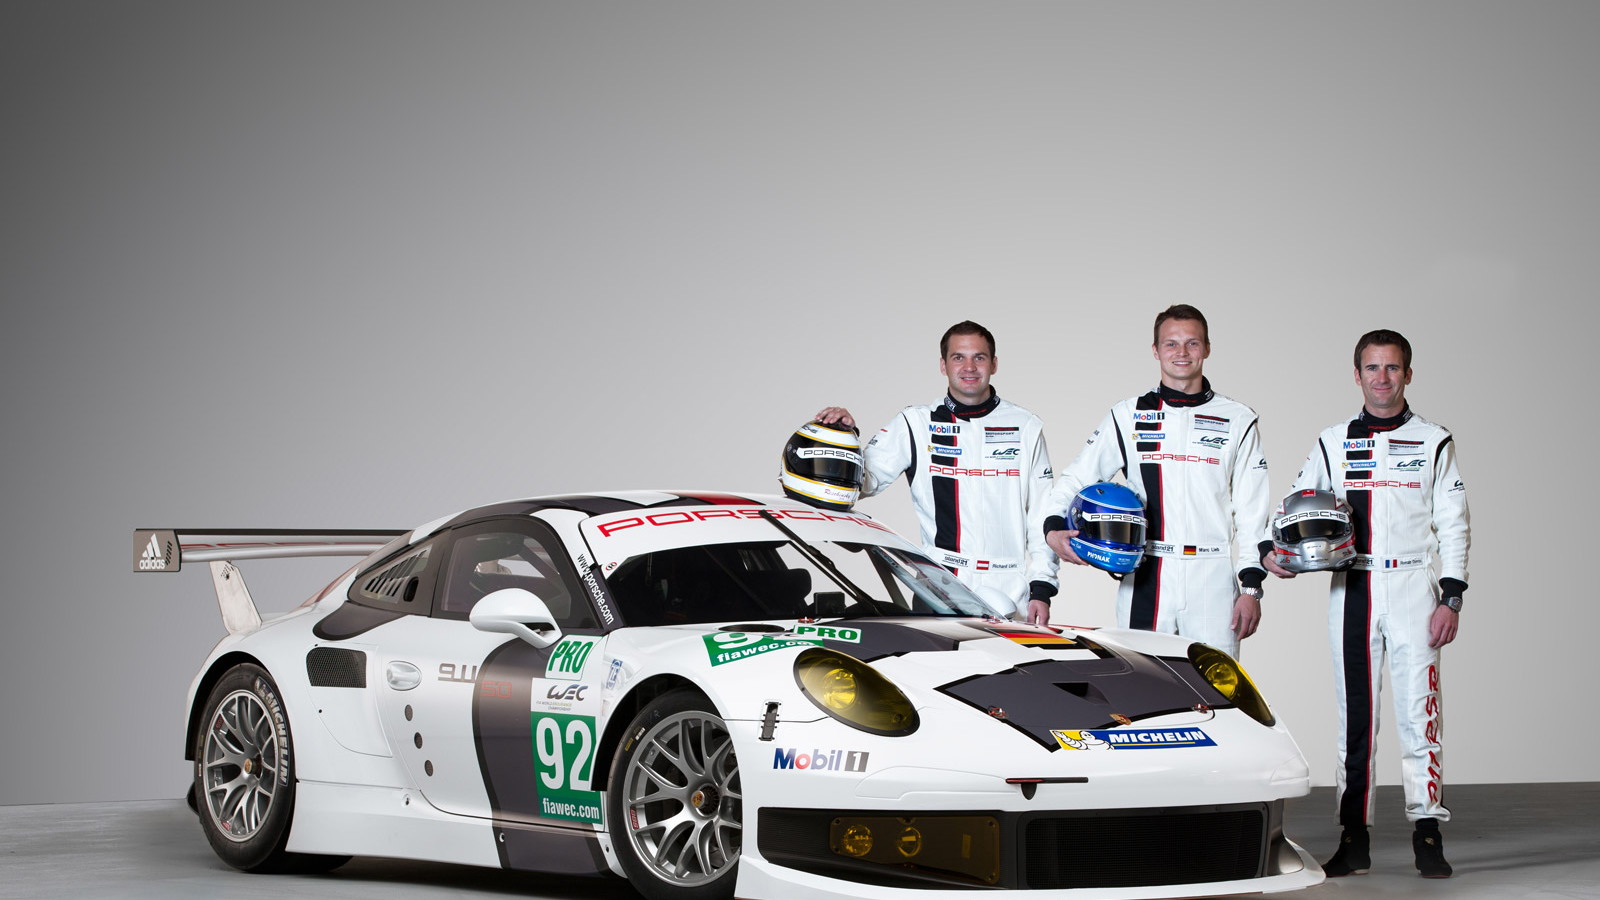 2013 Porsche 911 RSR race car